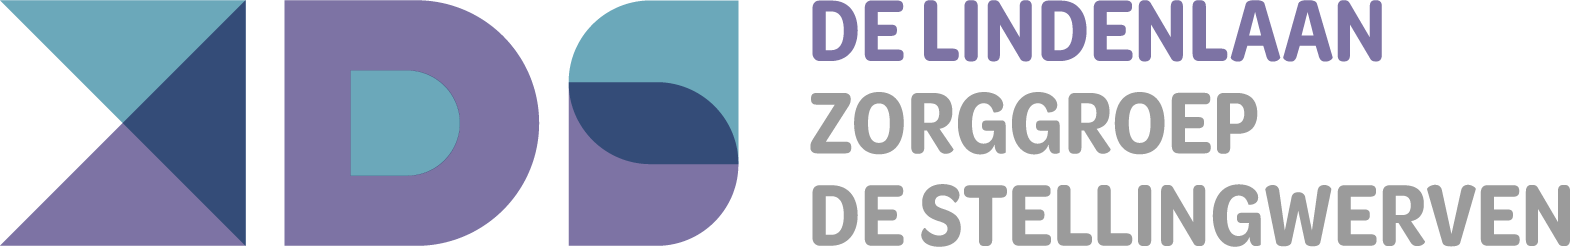 Logo De Lindenlaan Zorggroep de Stellingwerven